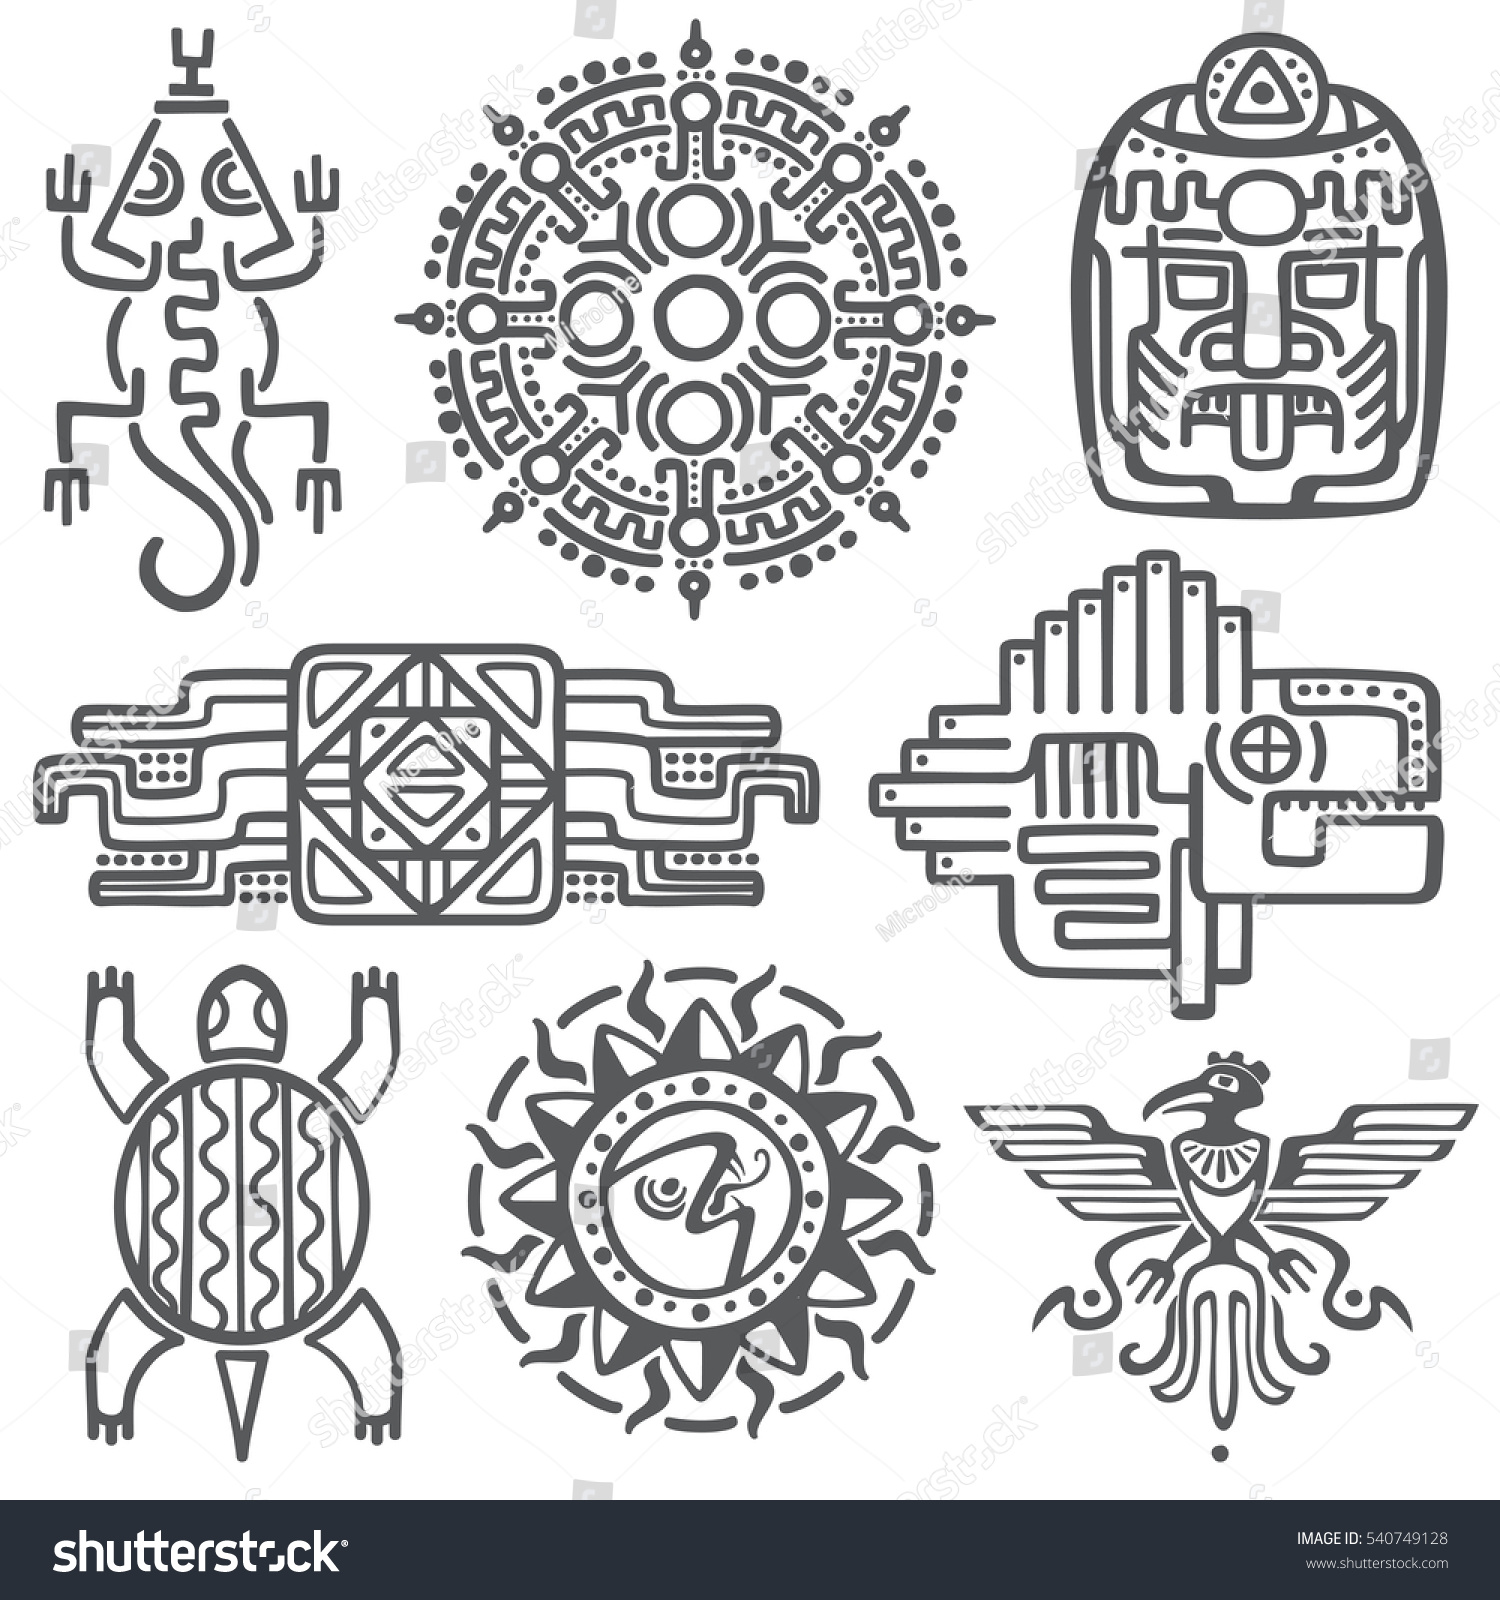 inca animal symbols